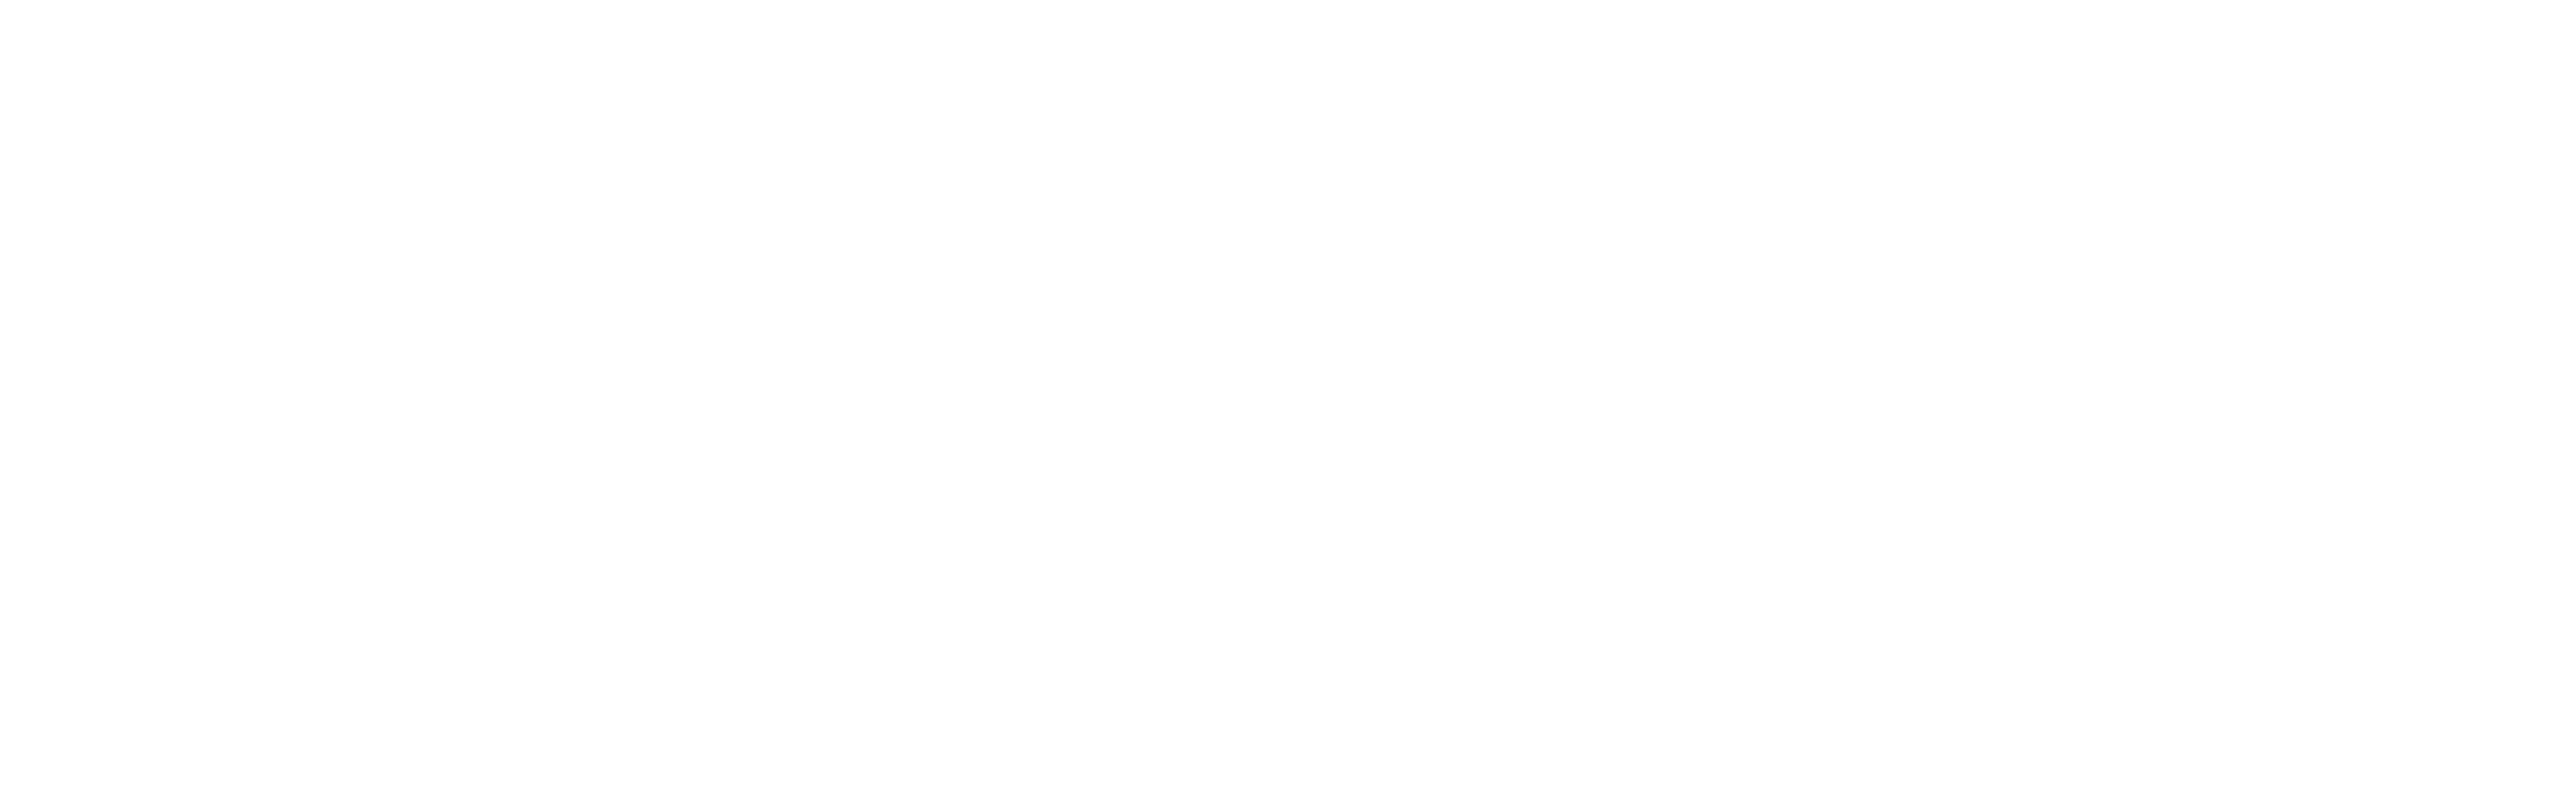 logo htx Bachma-01